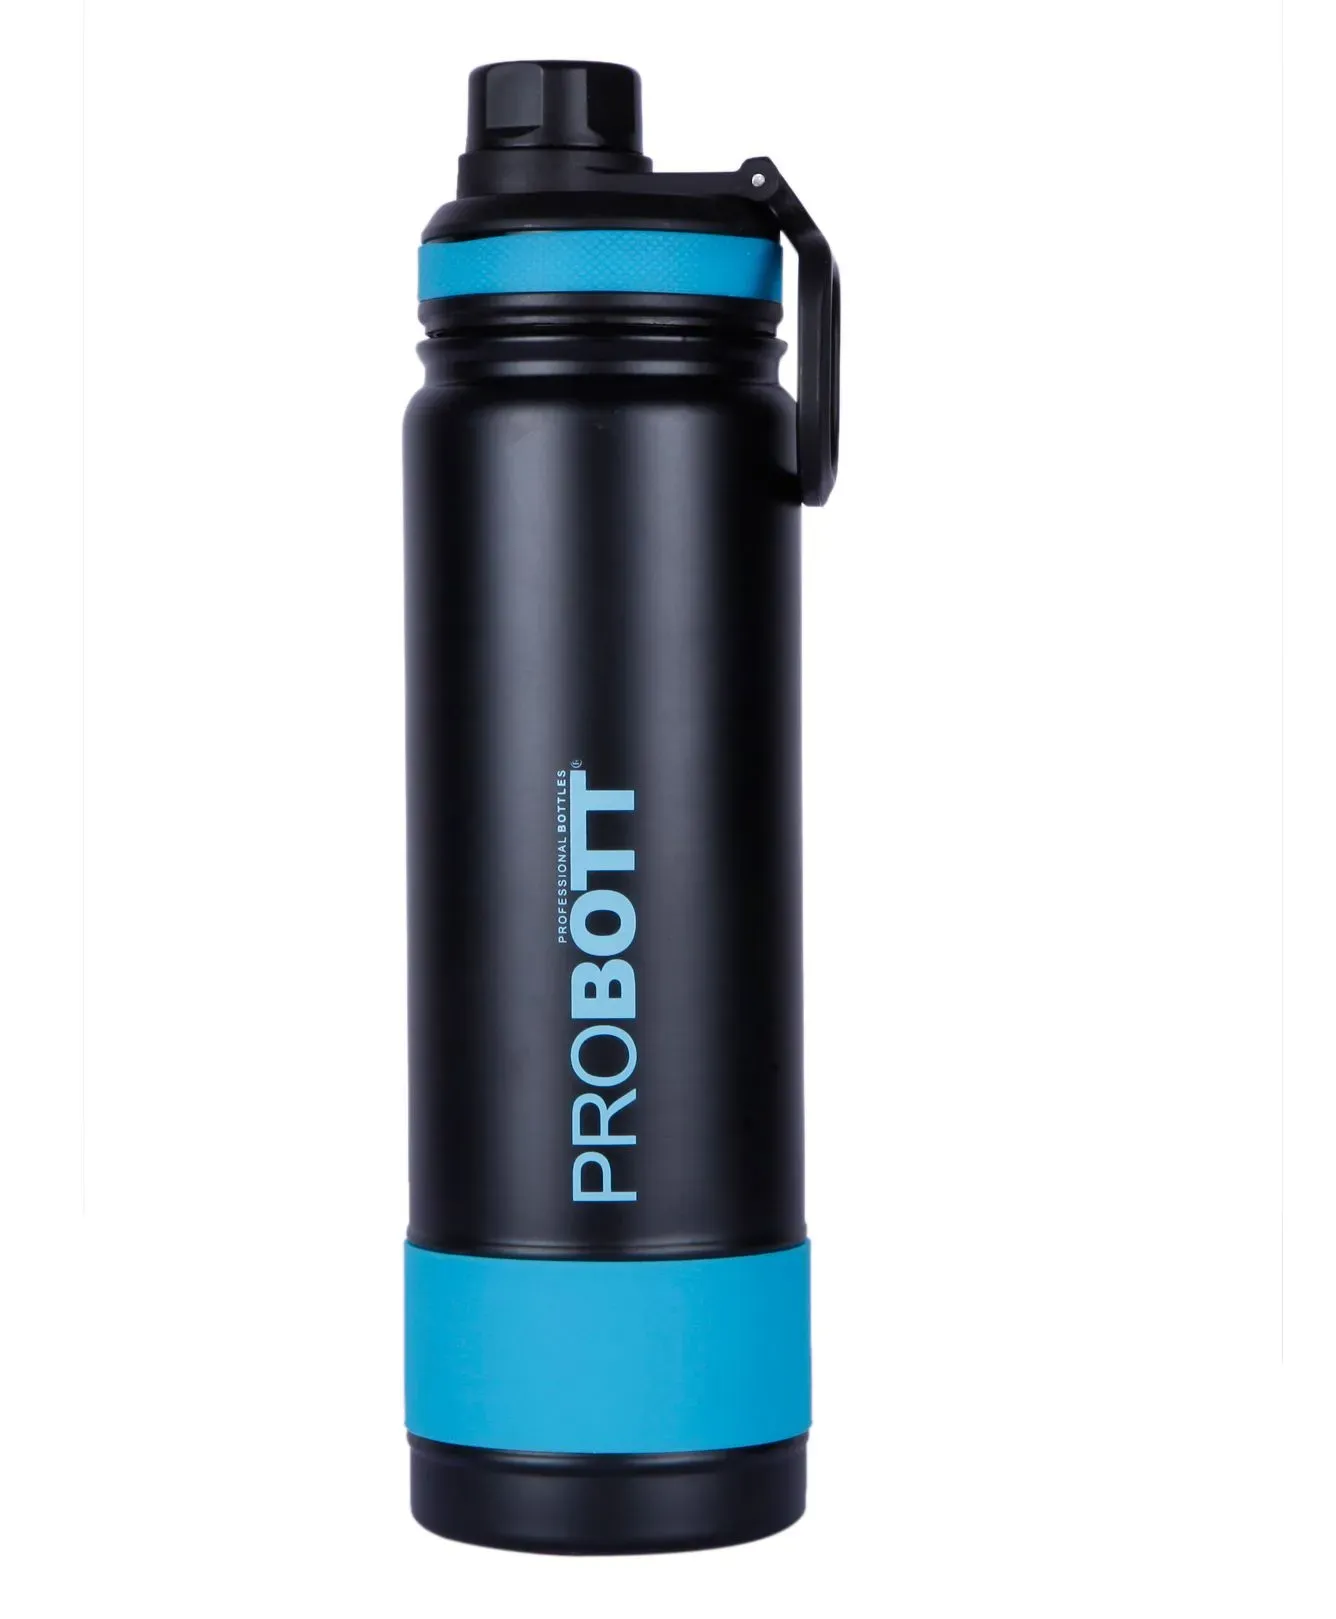 Probott Insulated Sports Bottle PB 700-01 Blue 700 ml